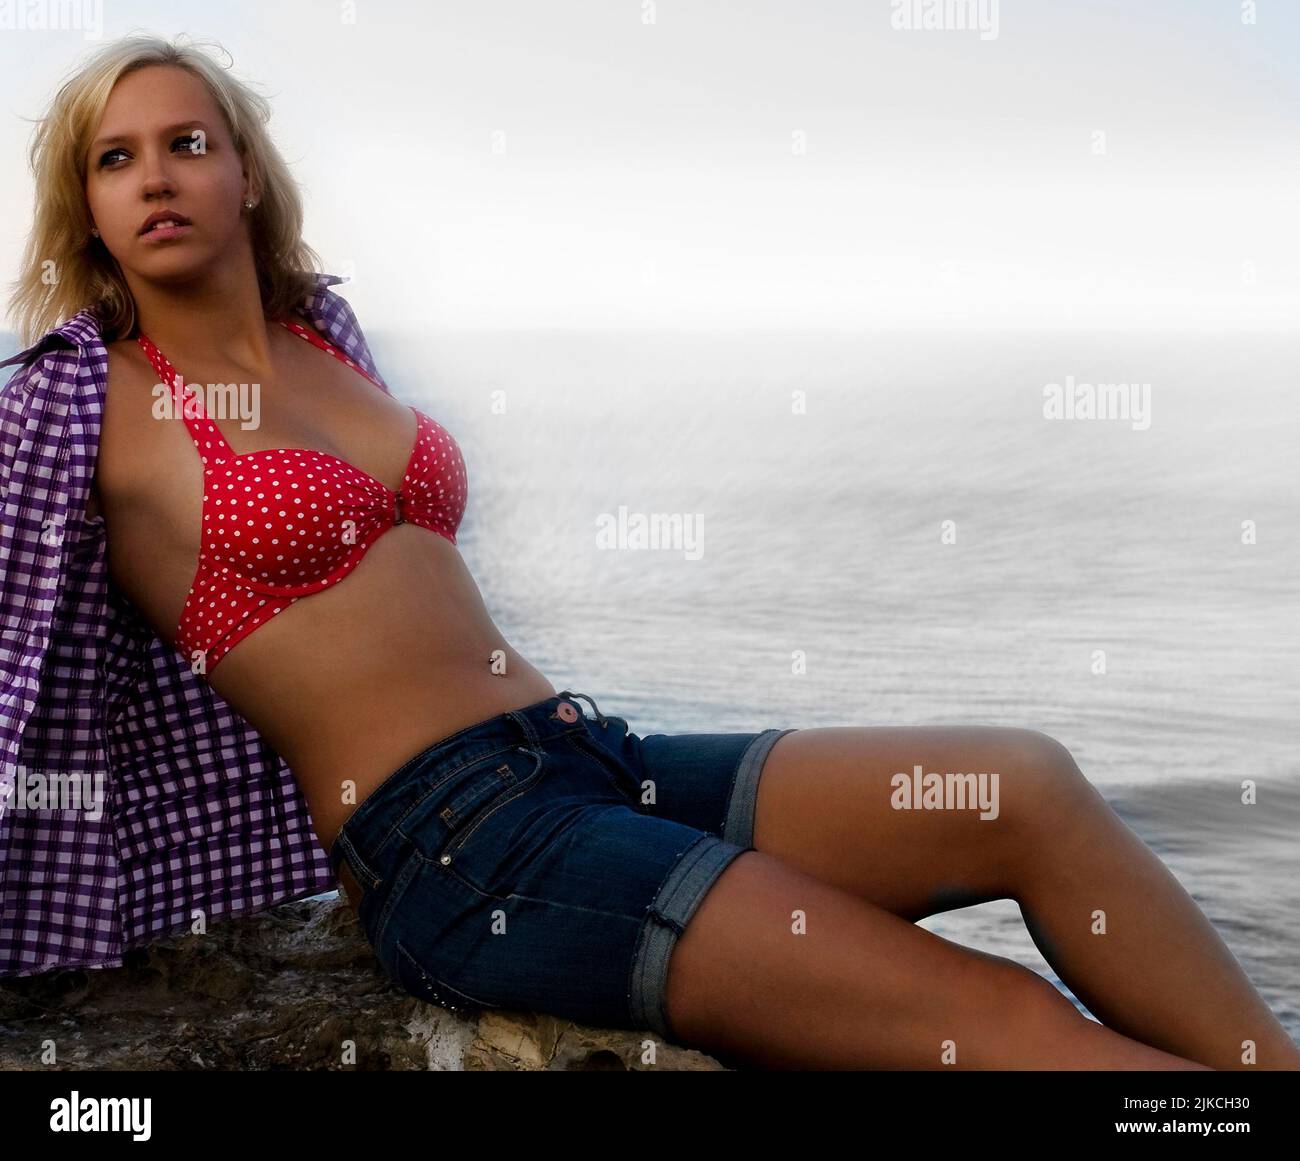 A beautiful blond Caucasian woman in a bikini top, flannel shirt and shorts, posing near a calm sea Stock Photo